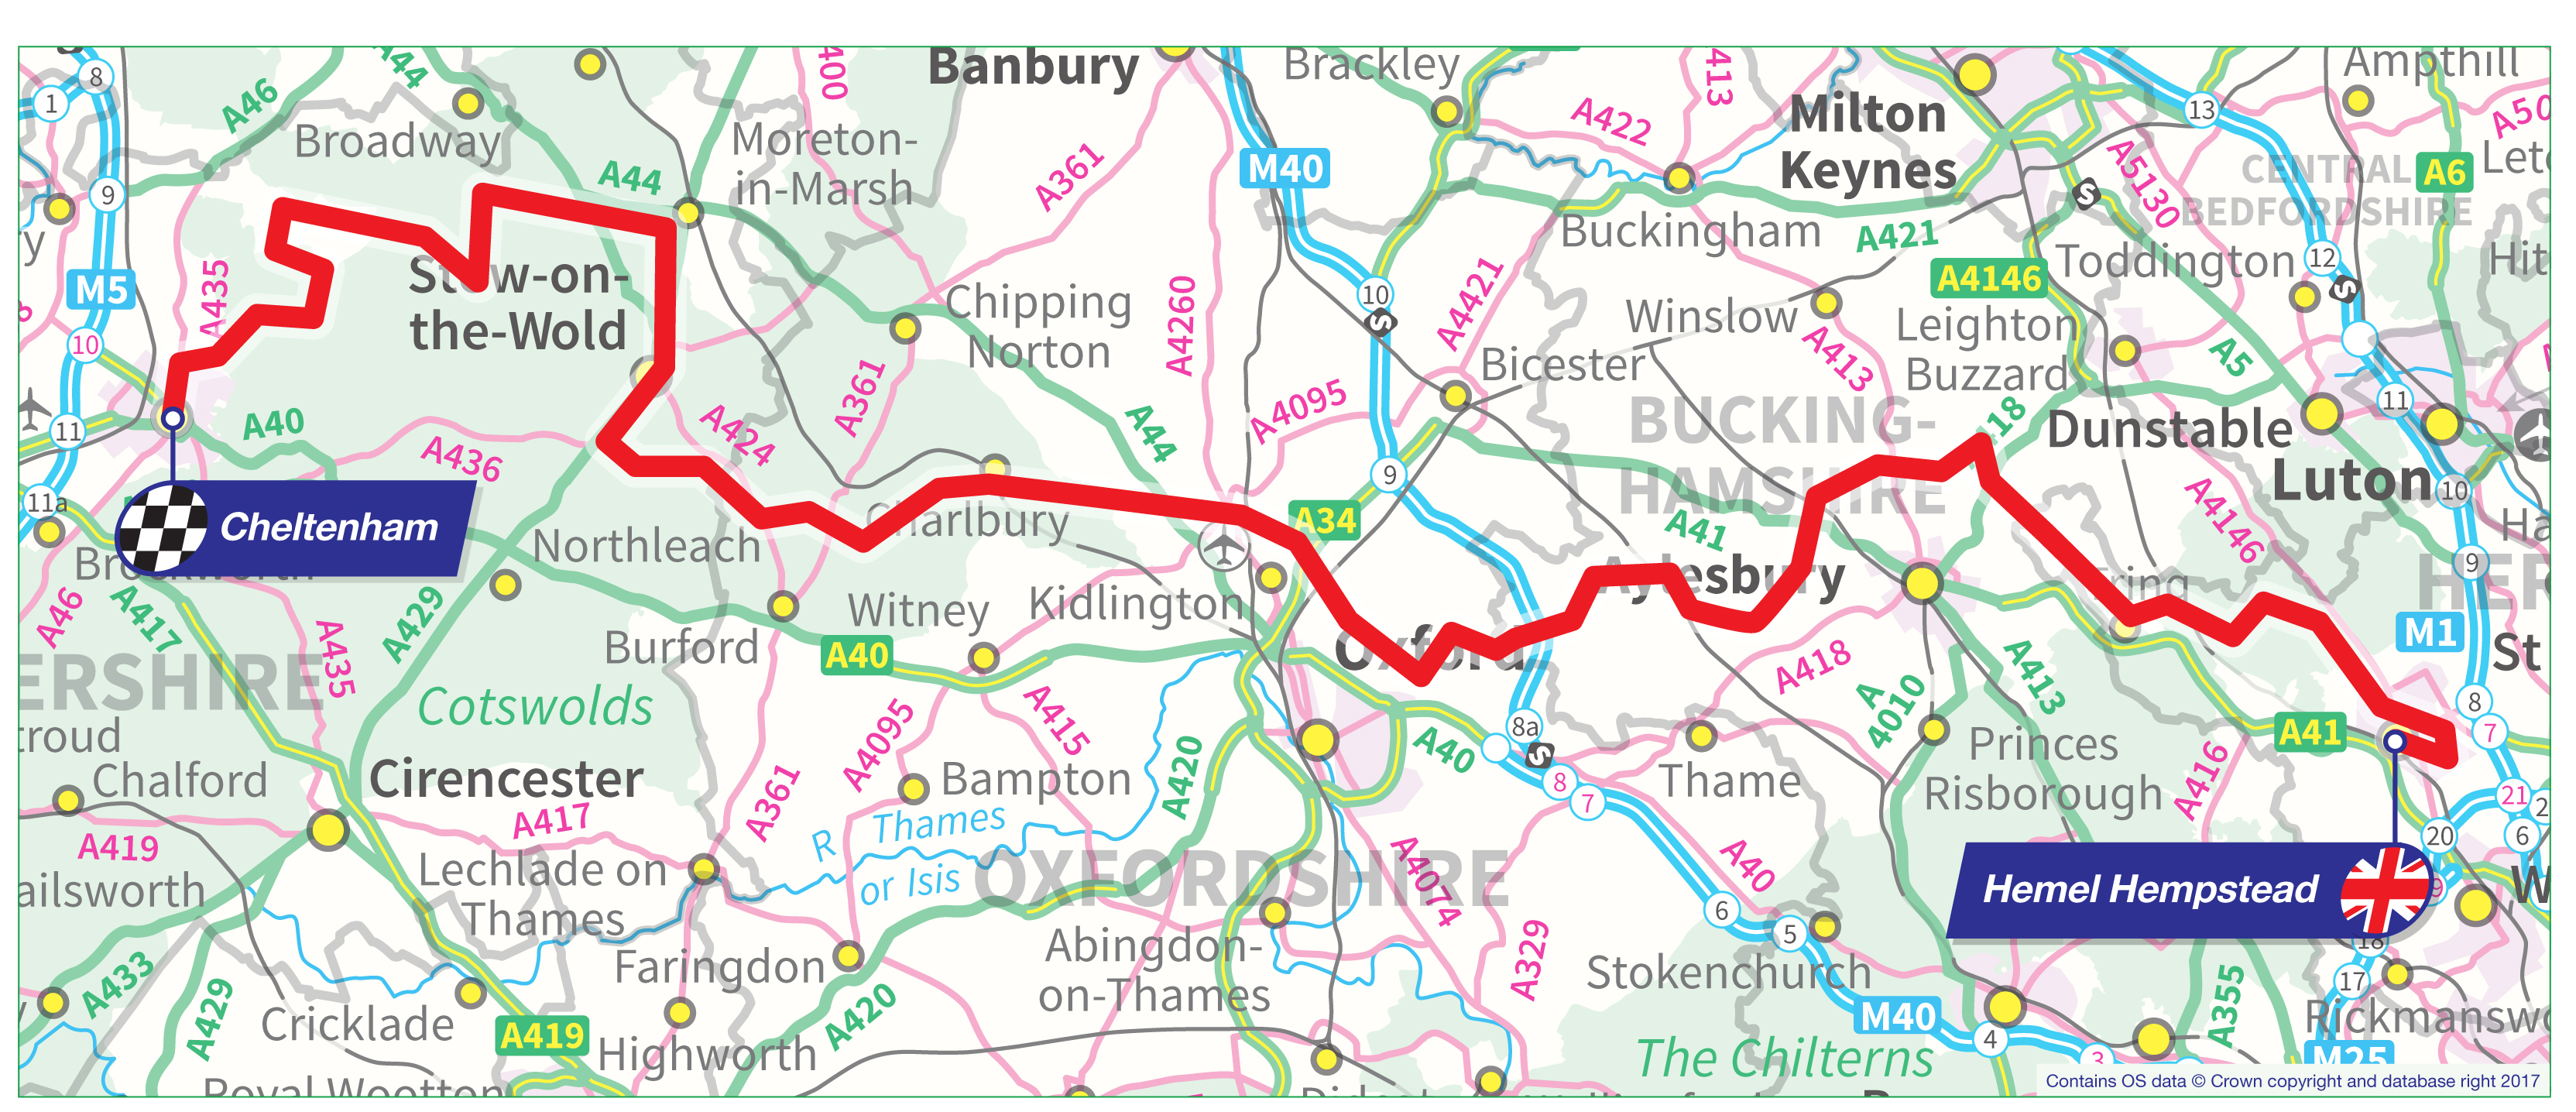 tour of britain route through gloucestershire